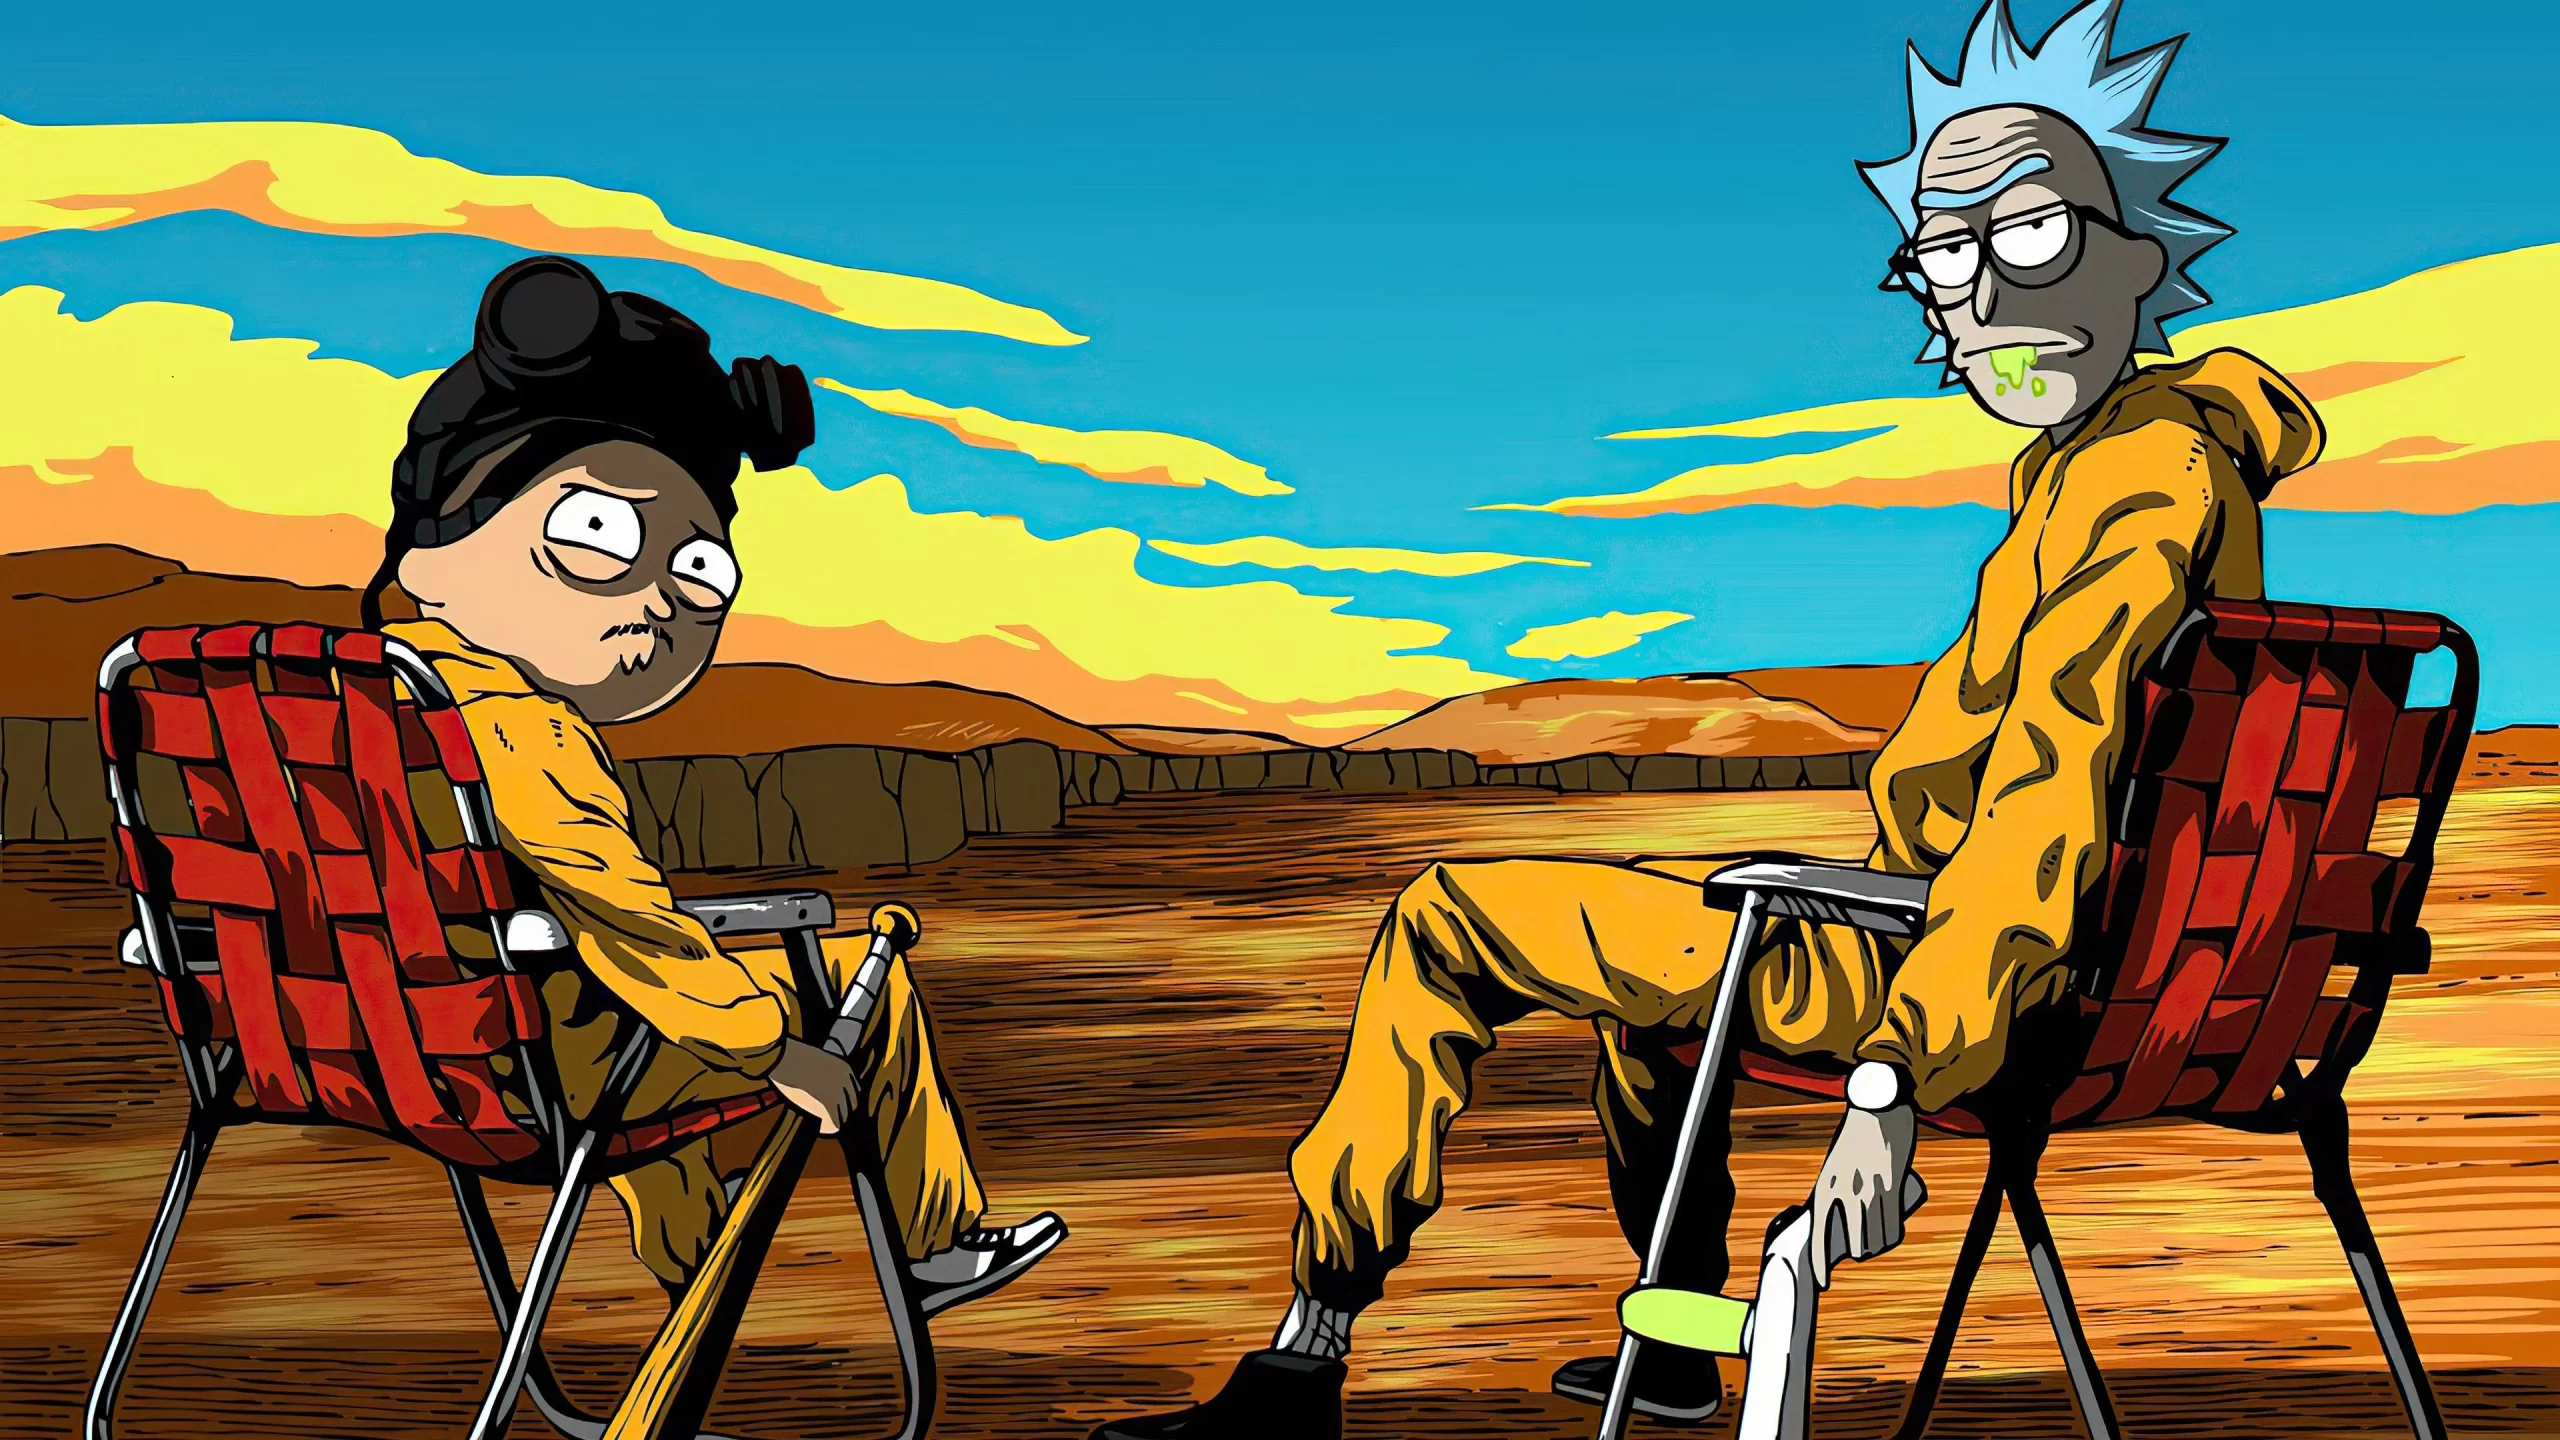 Rick And Morty Desktop Wallpaper